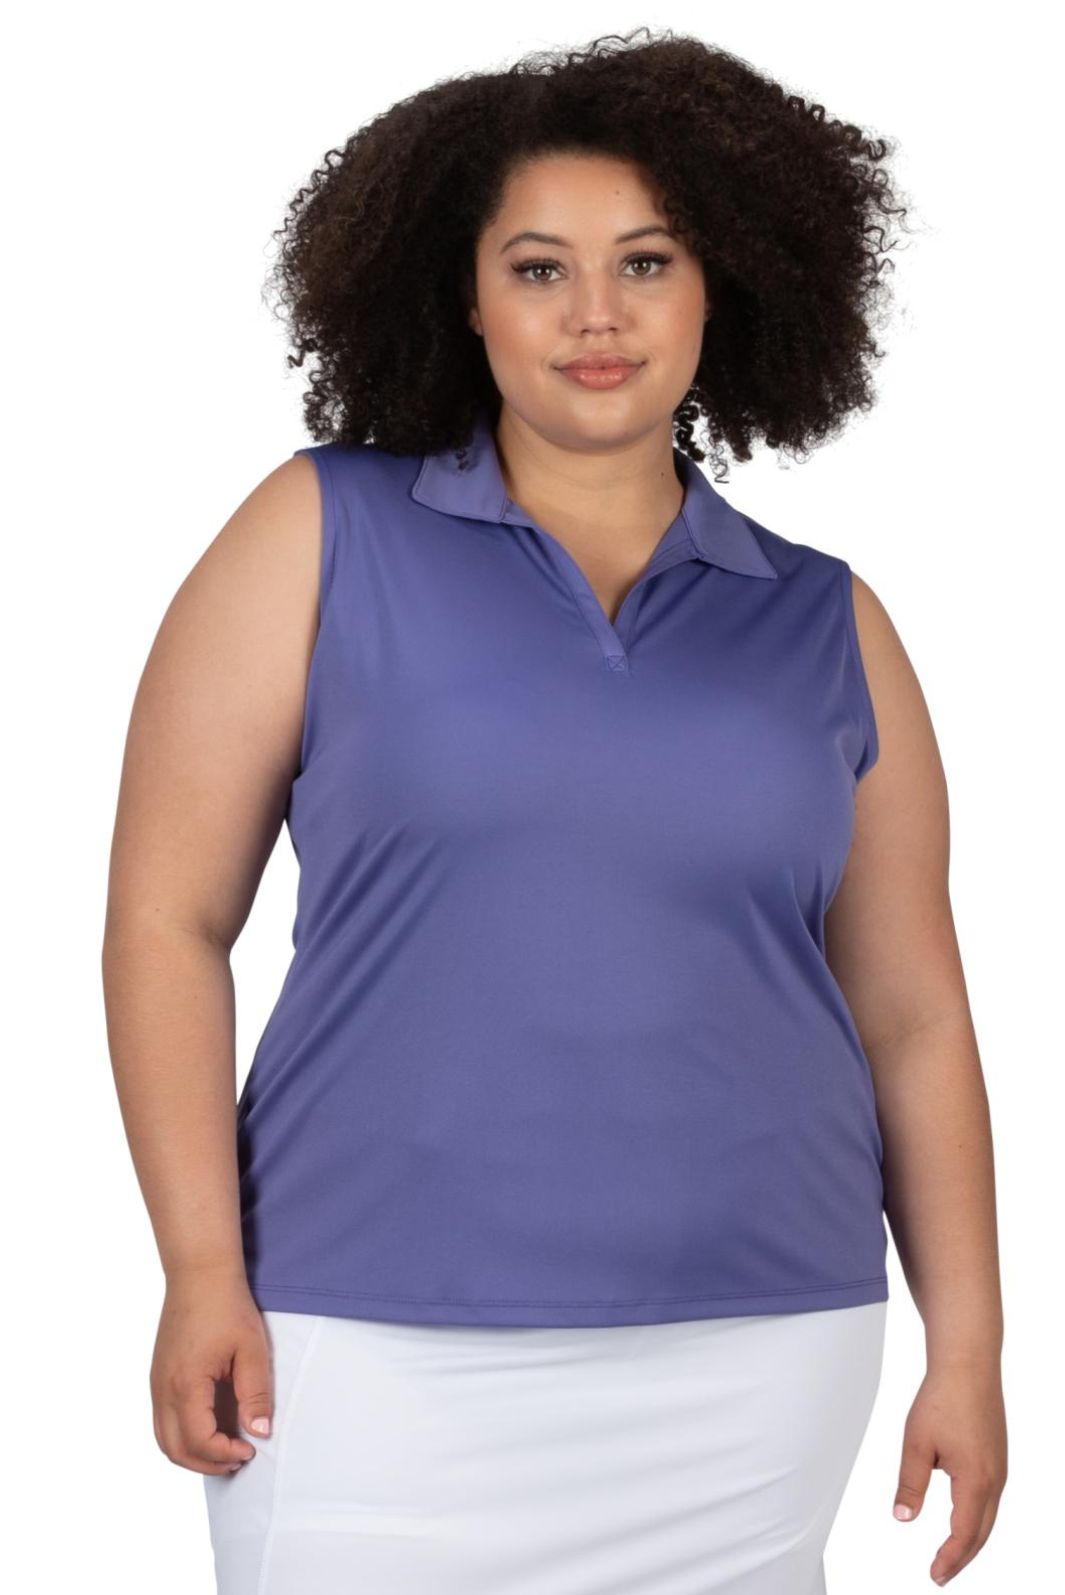  Womens Plus Size Golf Shirts Sleeveless Polo Tank